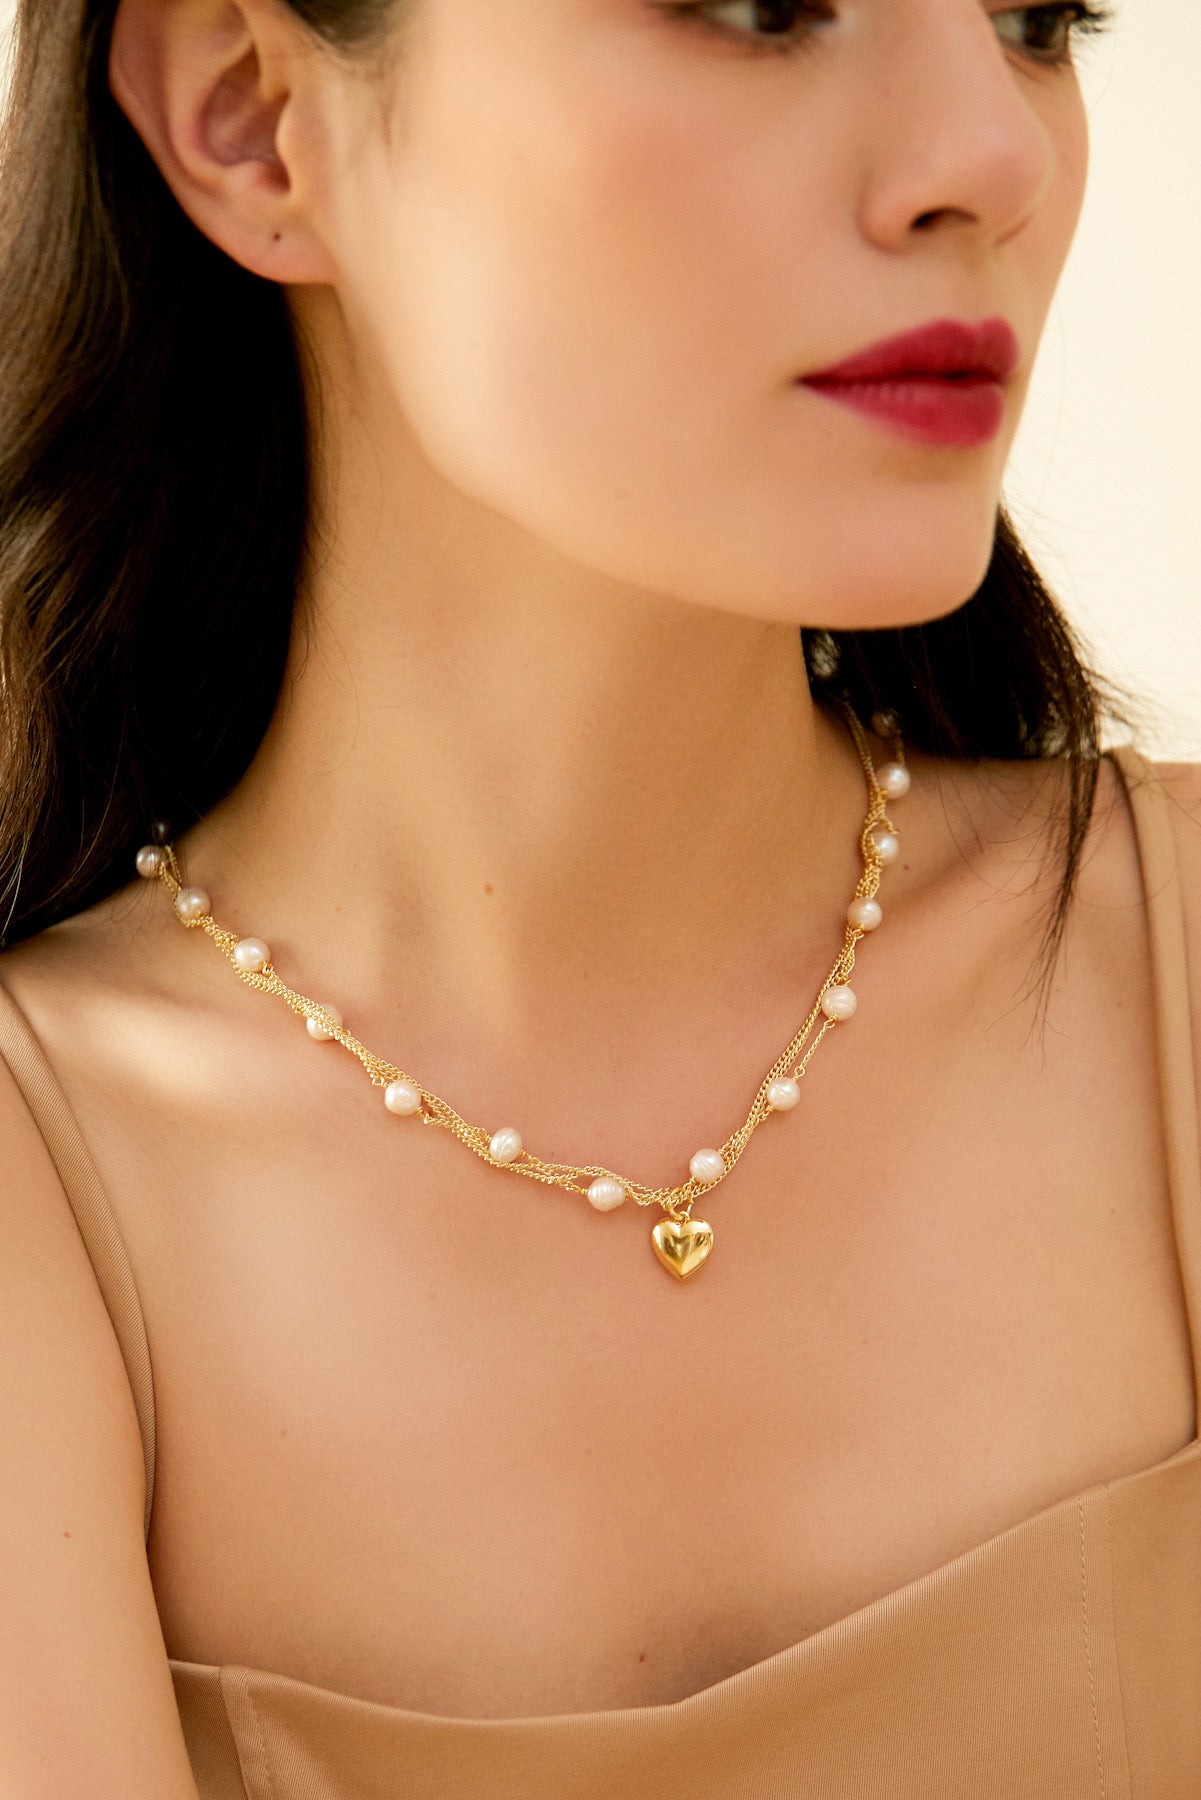 18K 750 Real Gold Heart Set Necklace Women's 18” long 1.2mm 5.2g | eBay